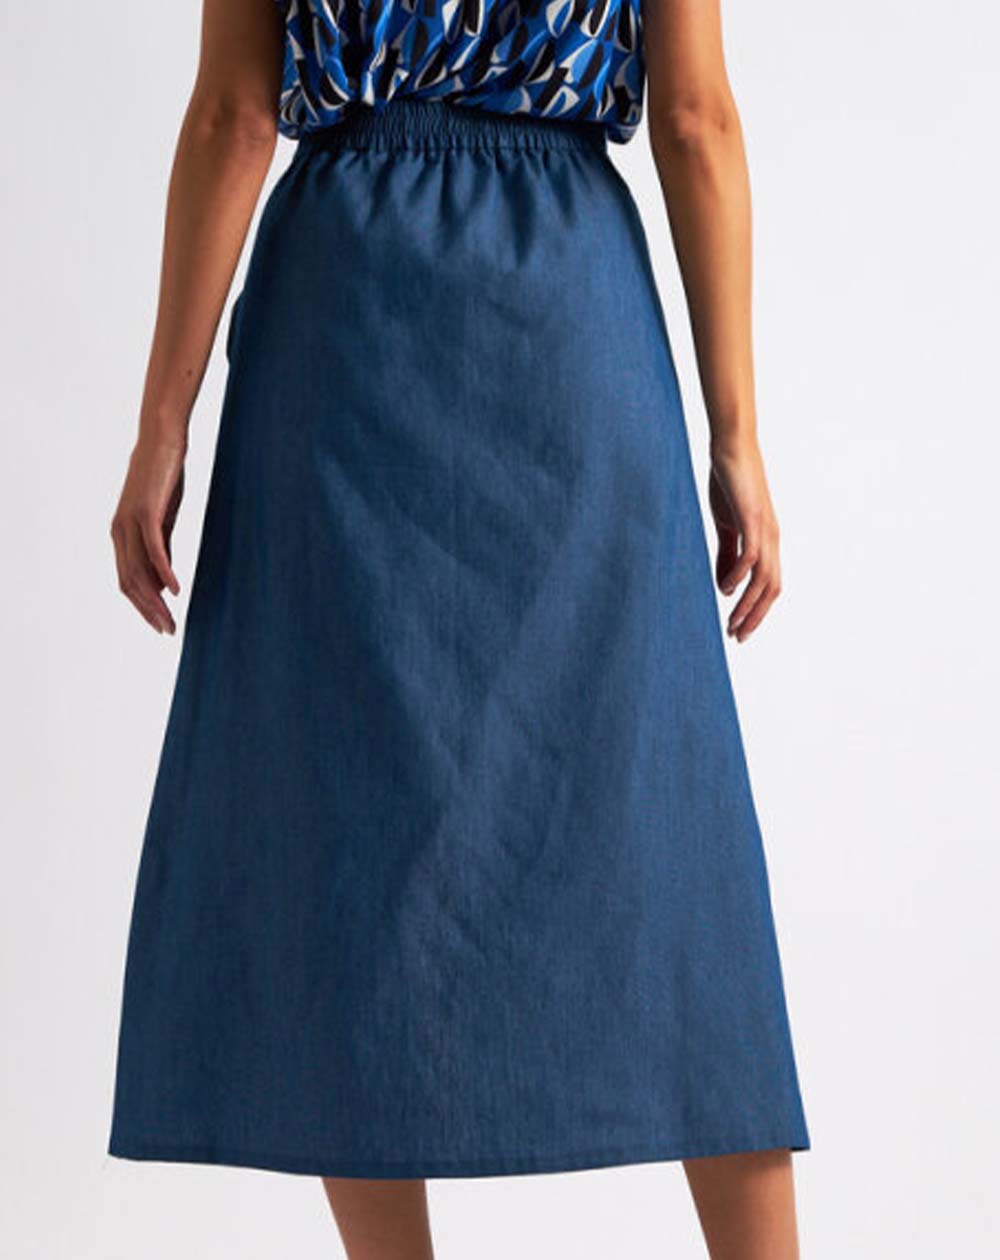 Louche - Jessy Midi Skirt - Chambray Blue